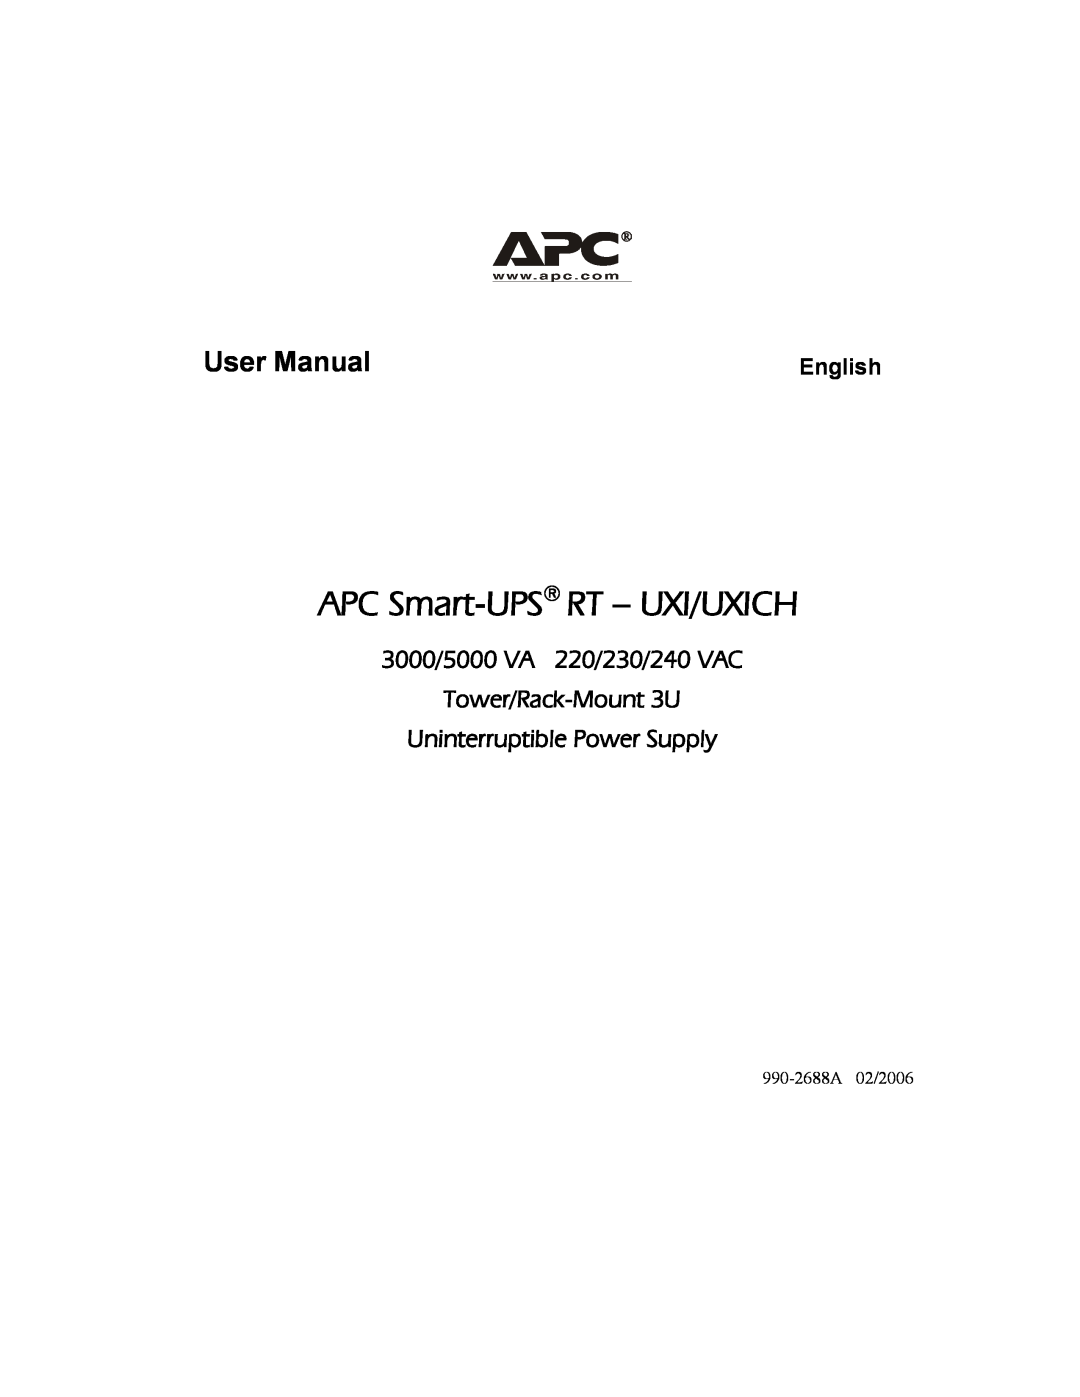 American Power Conversion UXI/UXICH user manual 3000/5000 VA 220/230/240 VAC Tower/Rack-Mount 3U, User Manual, English 